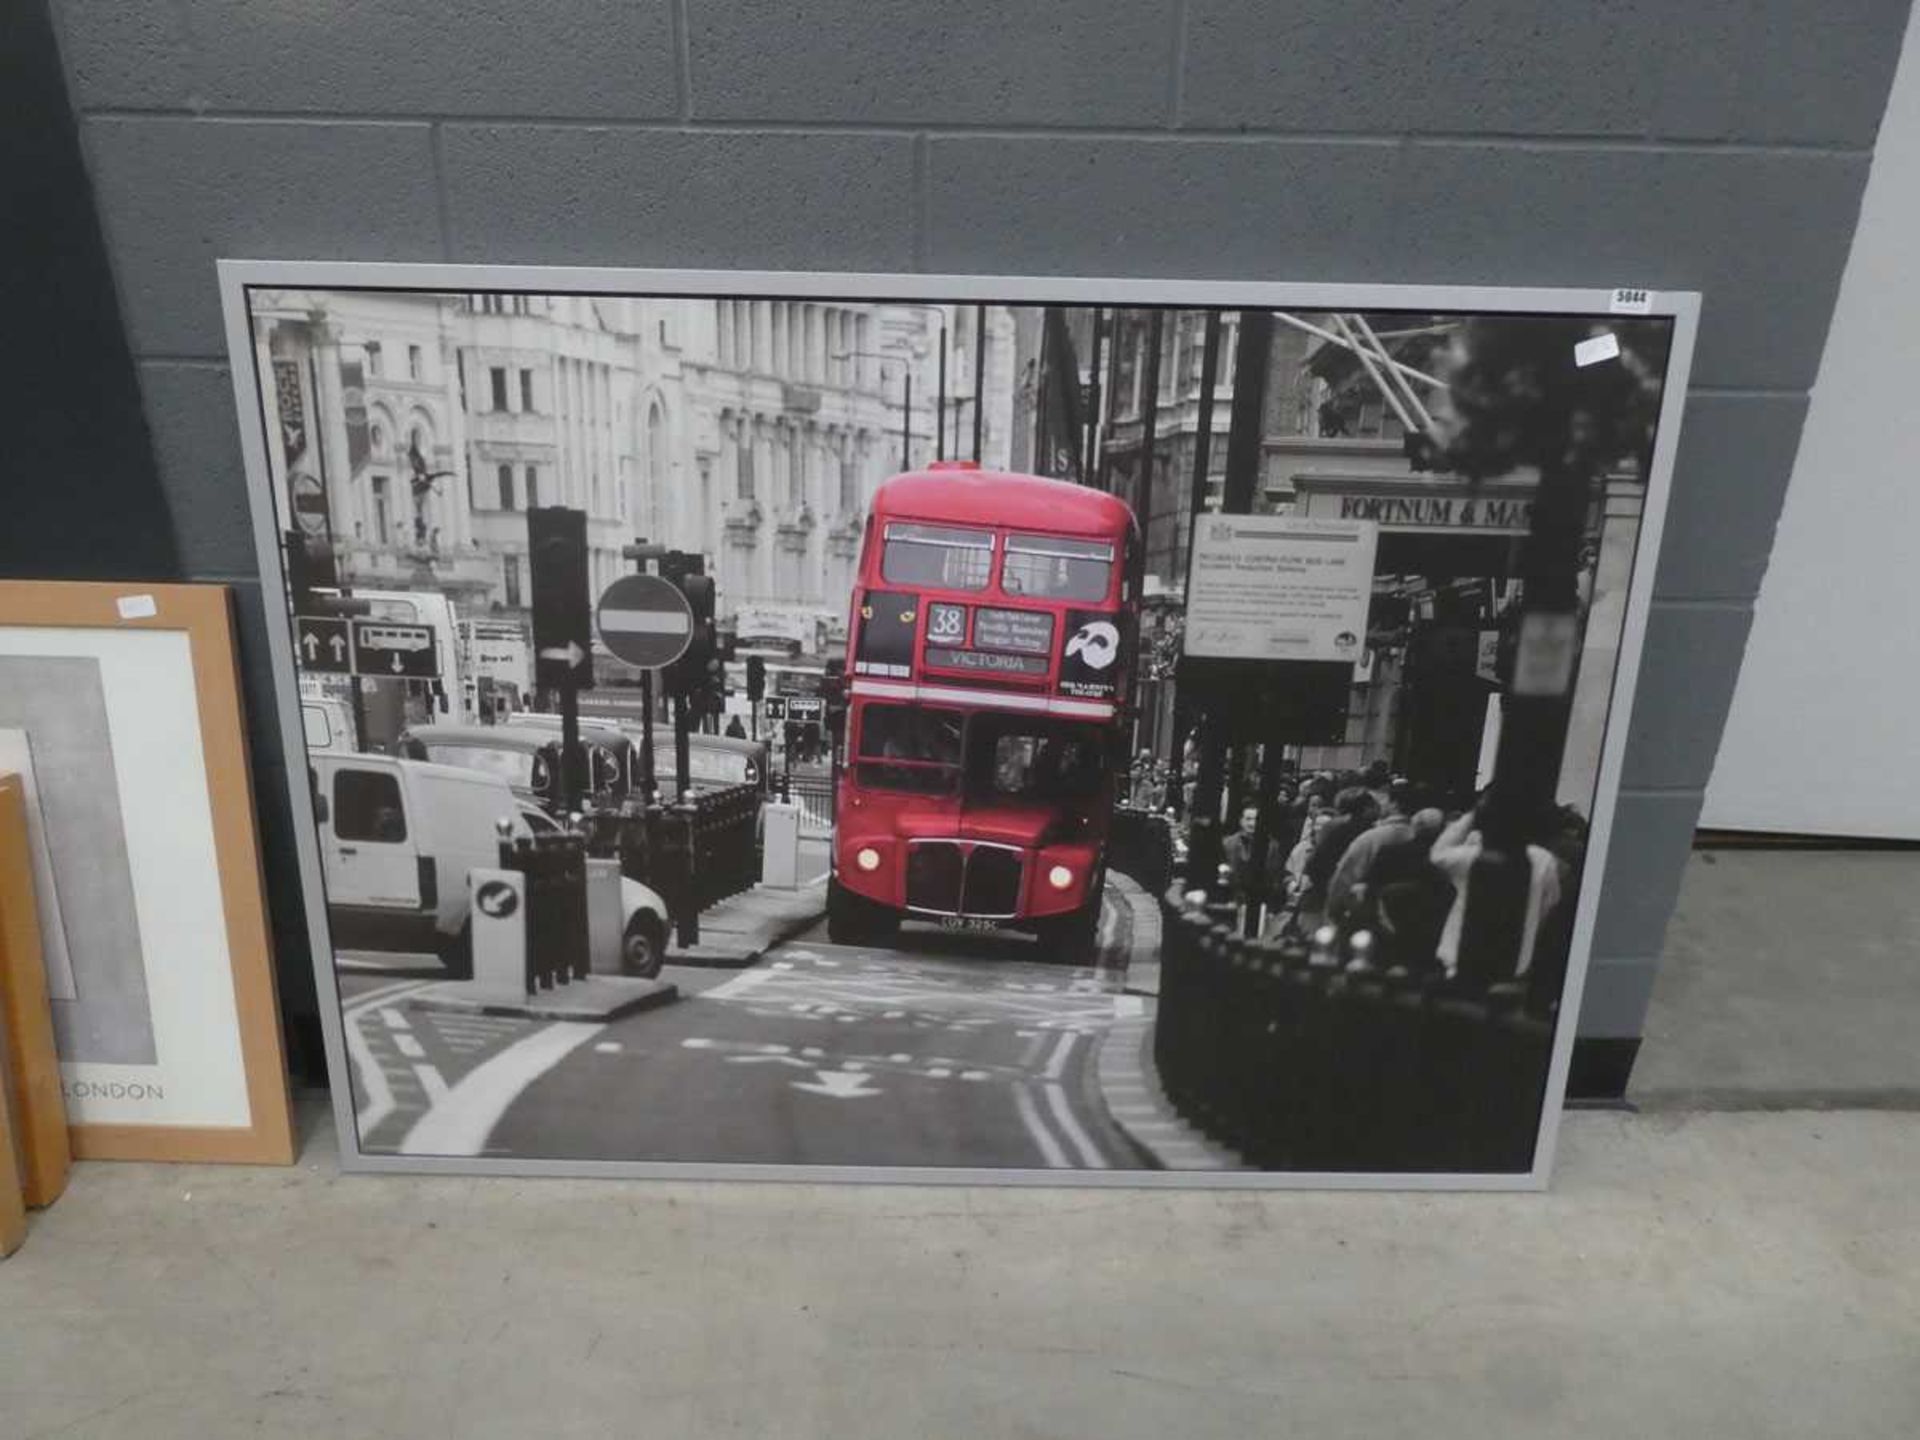 Photographic print - London bus